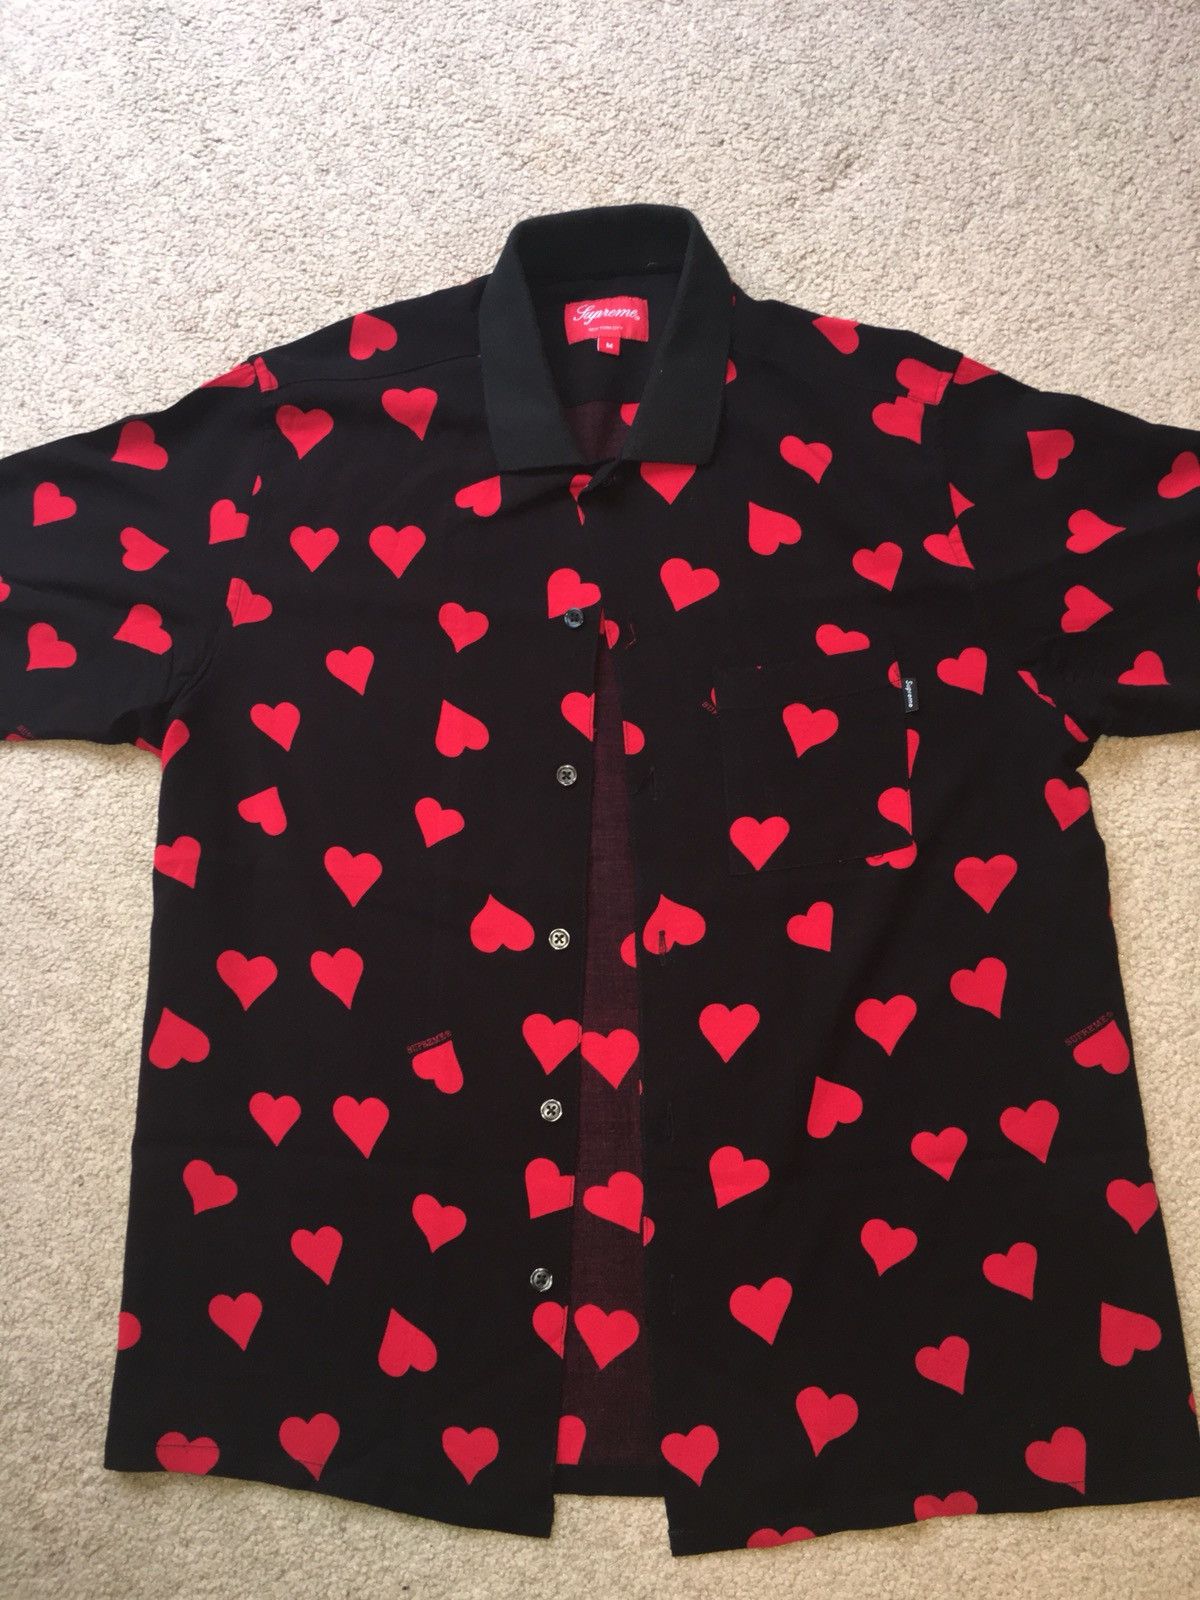 X Christopher Wool red Ss Button Up Shirt